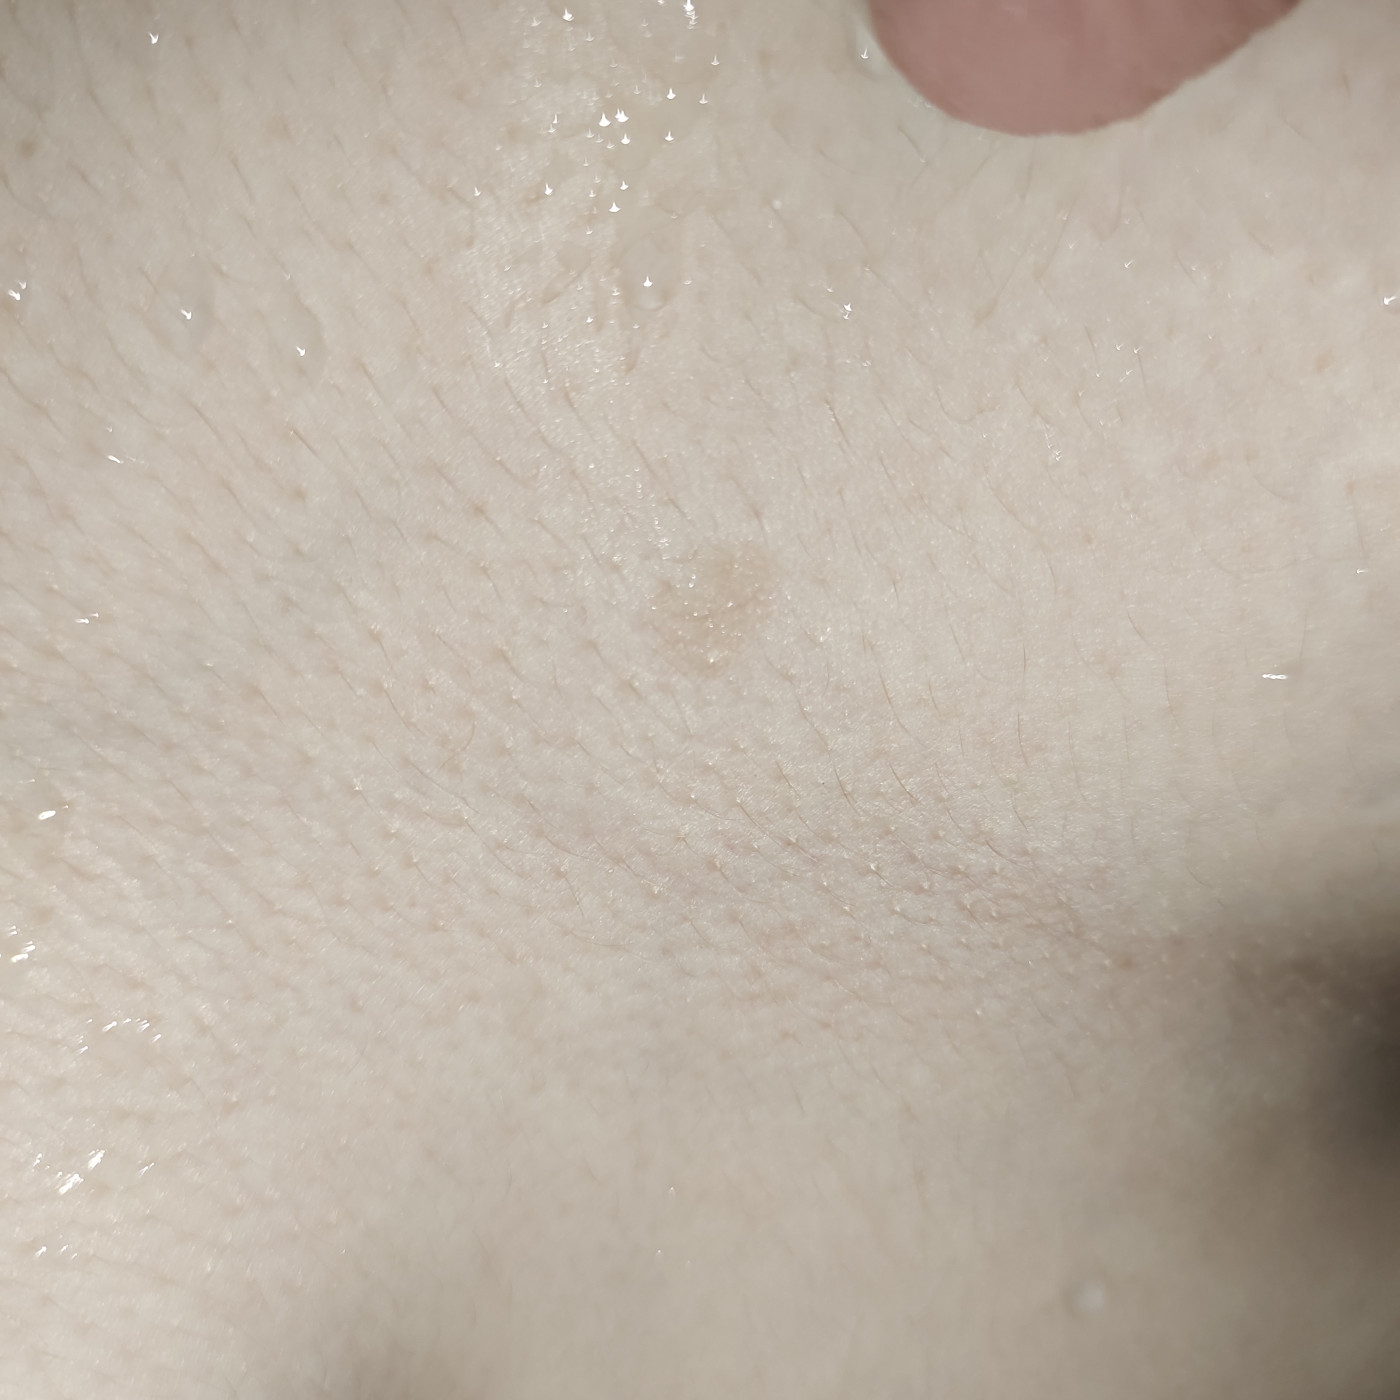 белые пятна на груди у женщин фото 89